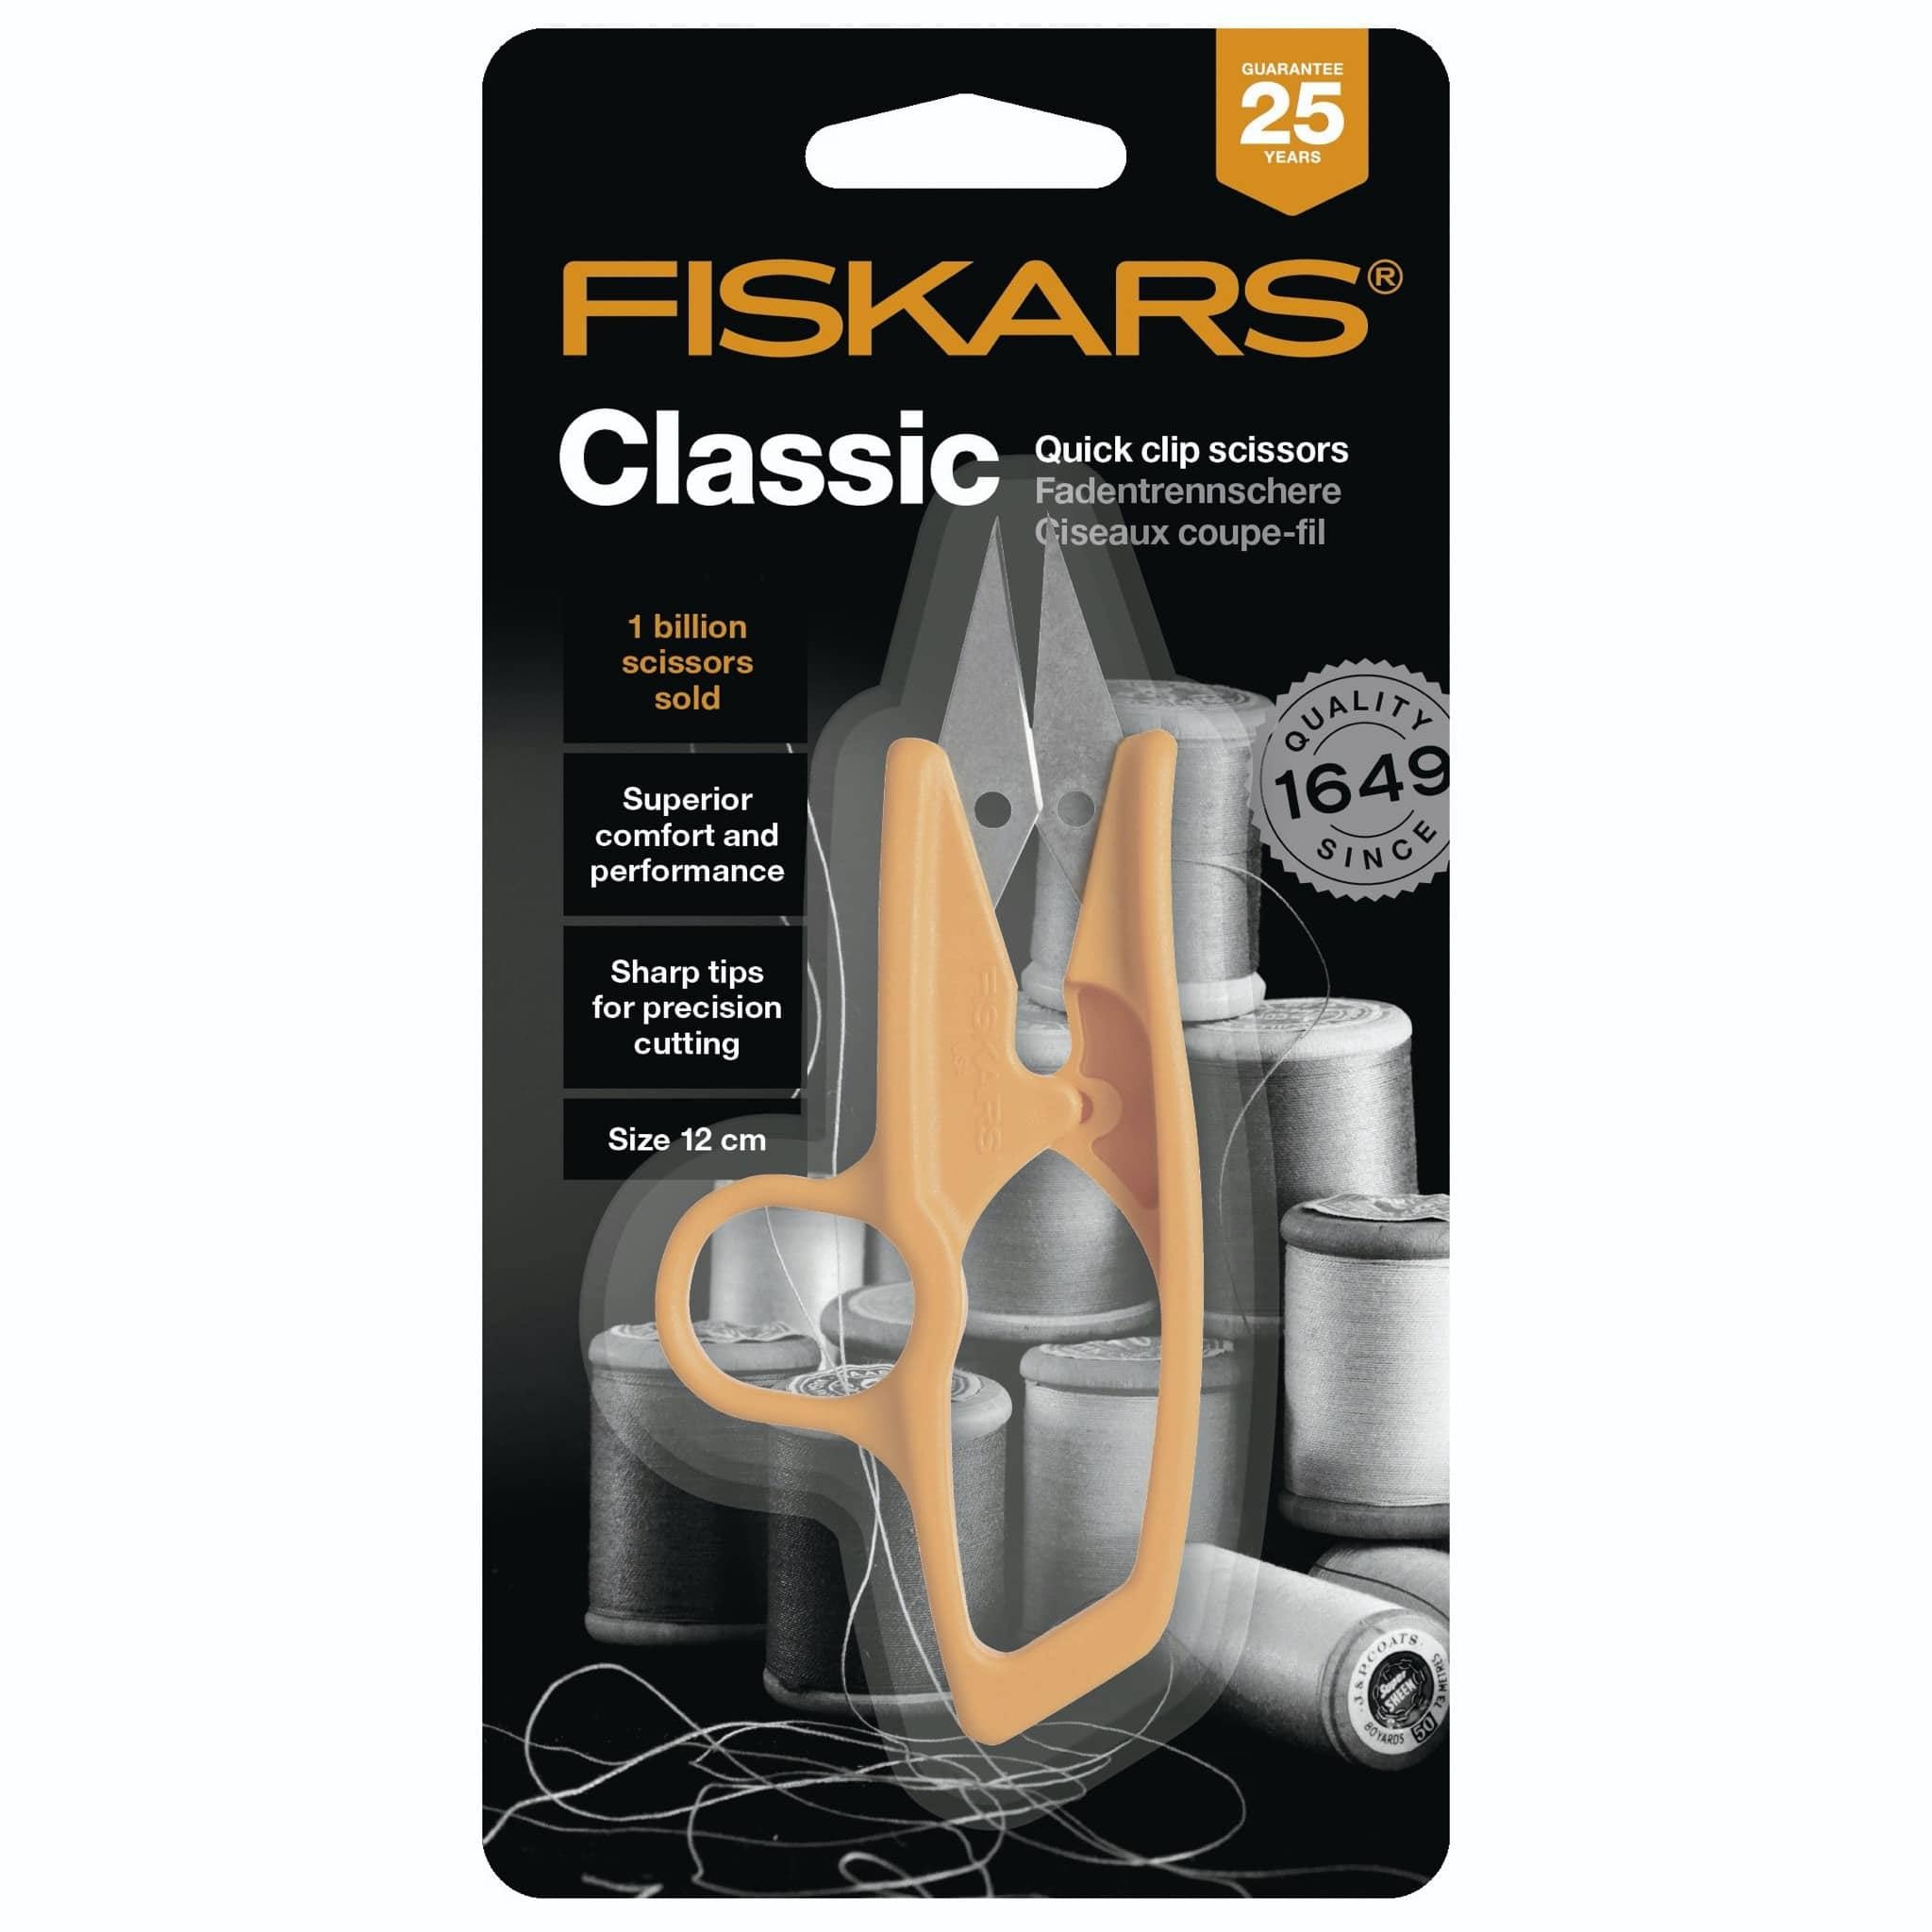 Fiskars Quick Clips (12cm/4.72in) classic